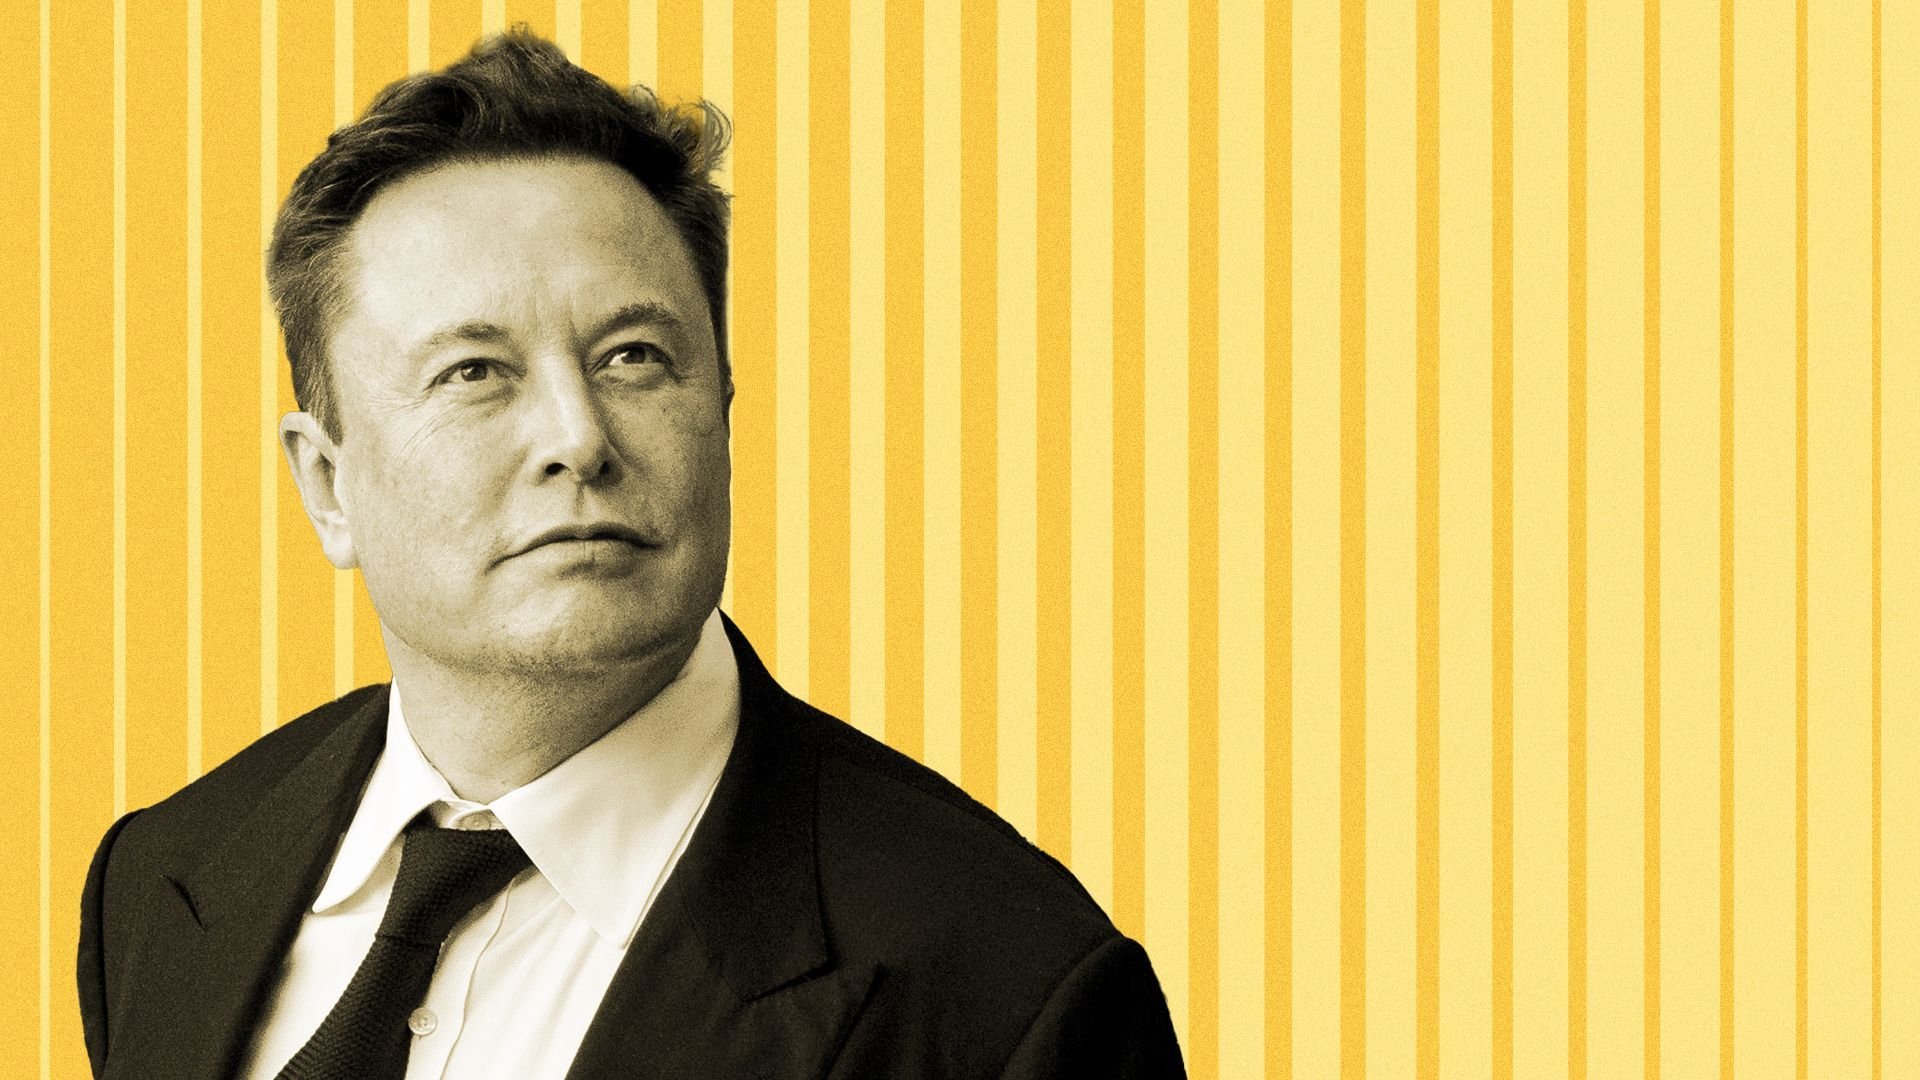 Elon Musk's X.ai aims to raise $1 billion